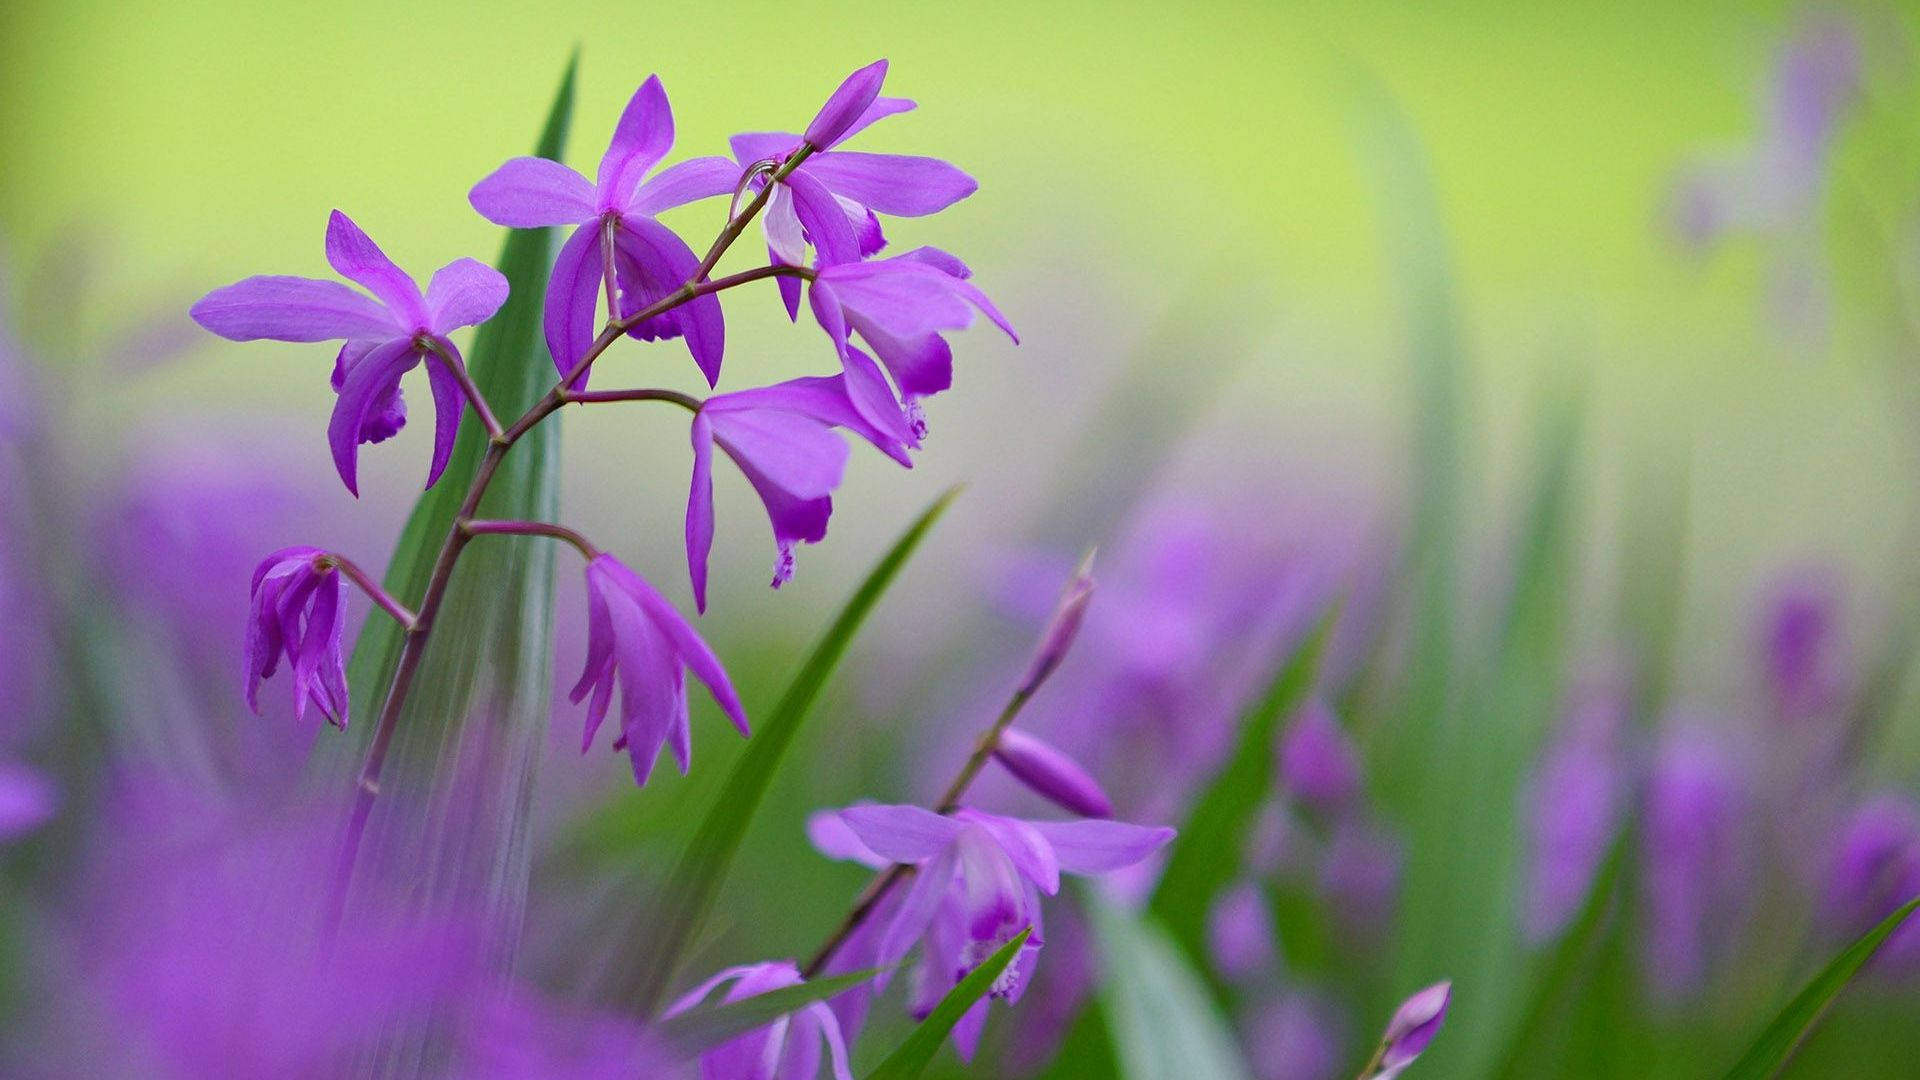 Image  A Vibrant Purple Flower on a Desktop Wallpaper